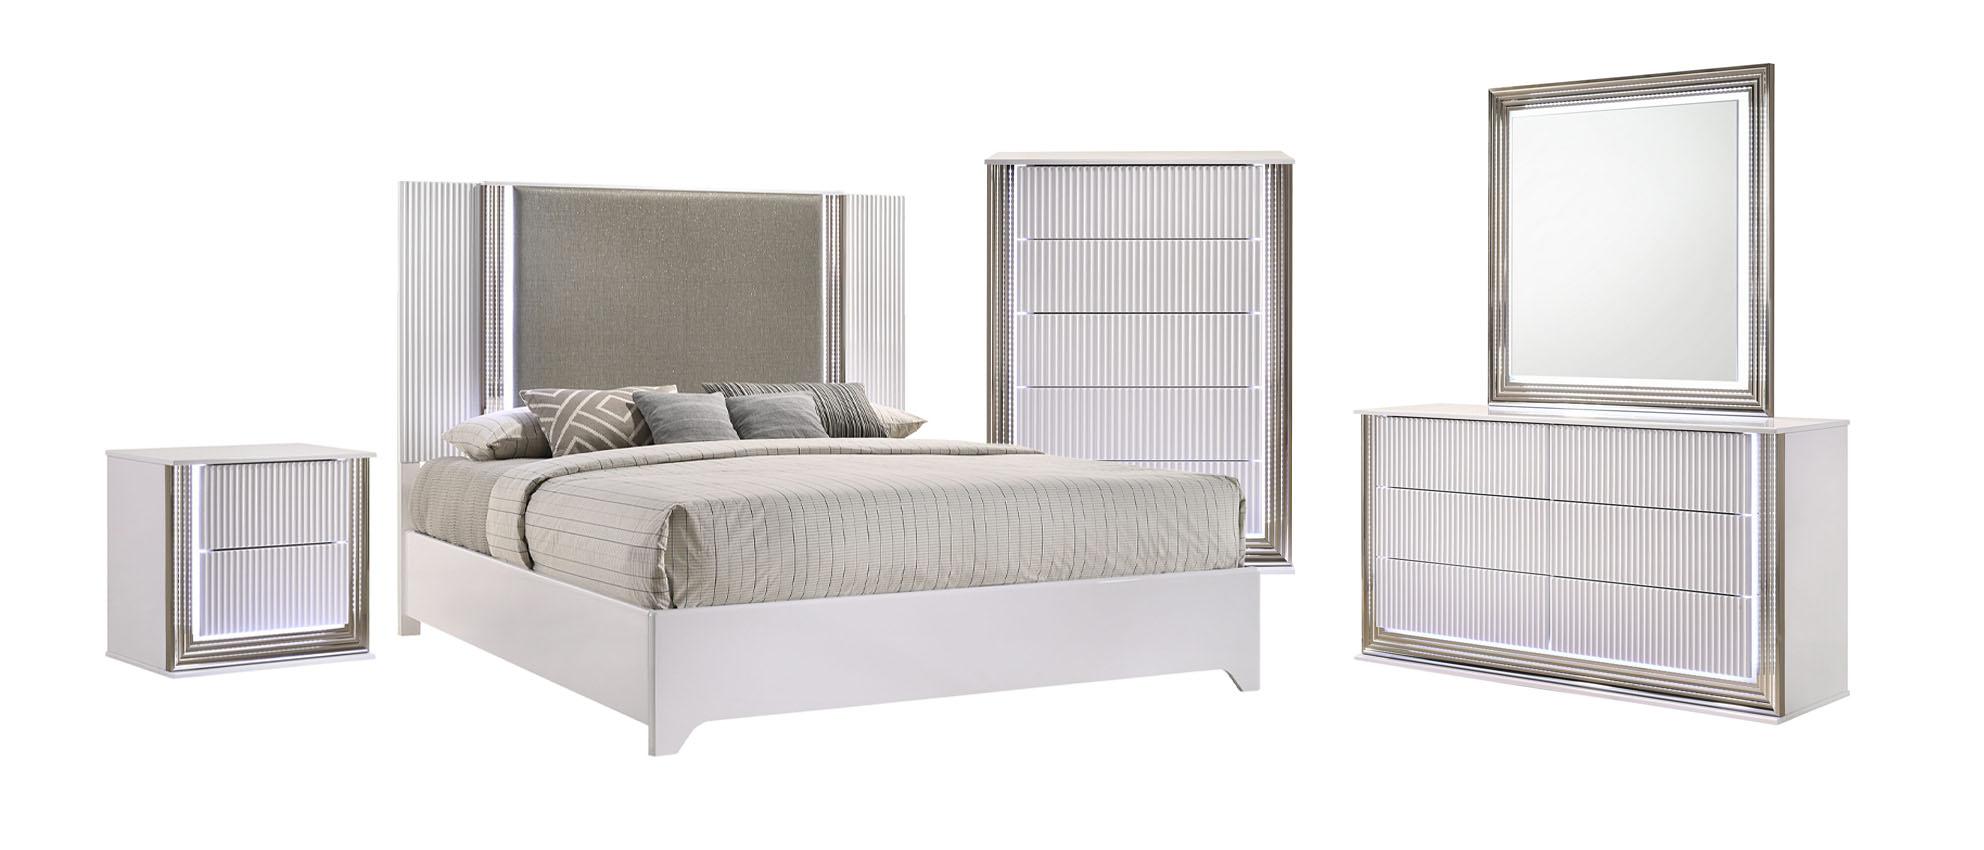 Modern Platform Bedroom Set ASPEN ASPEN-WH-QB-Set-5 in White Faux Leather